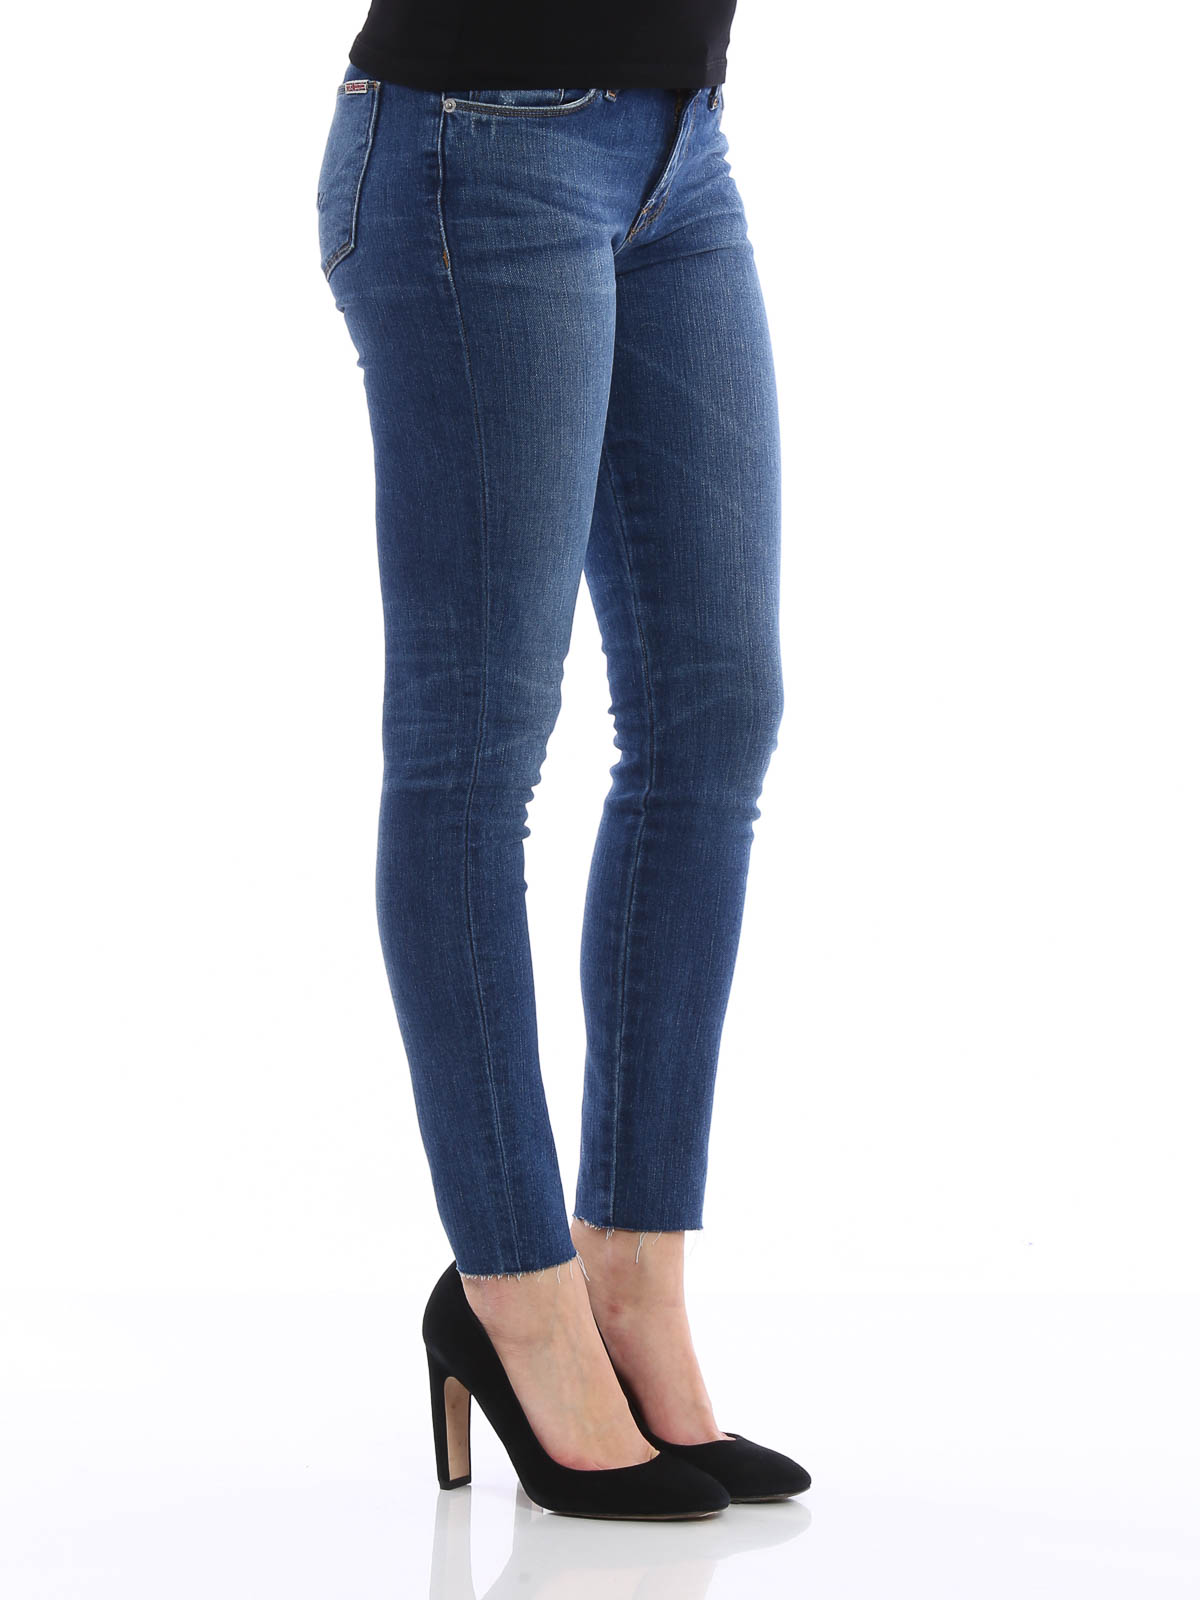 krista super skinny ankle jeans